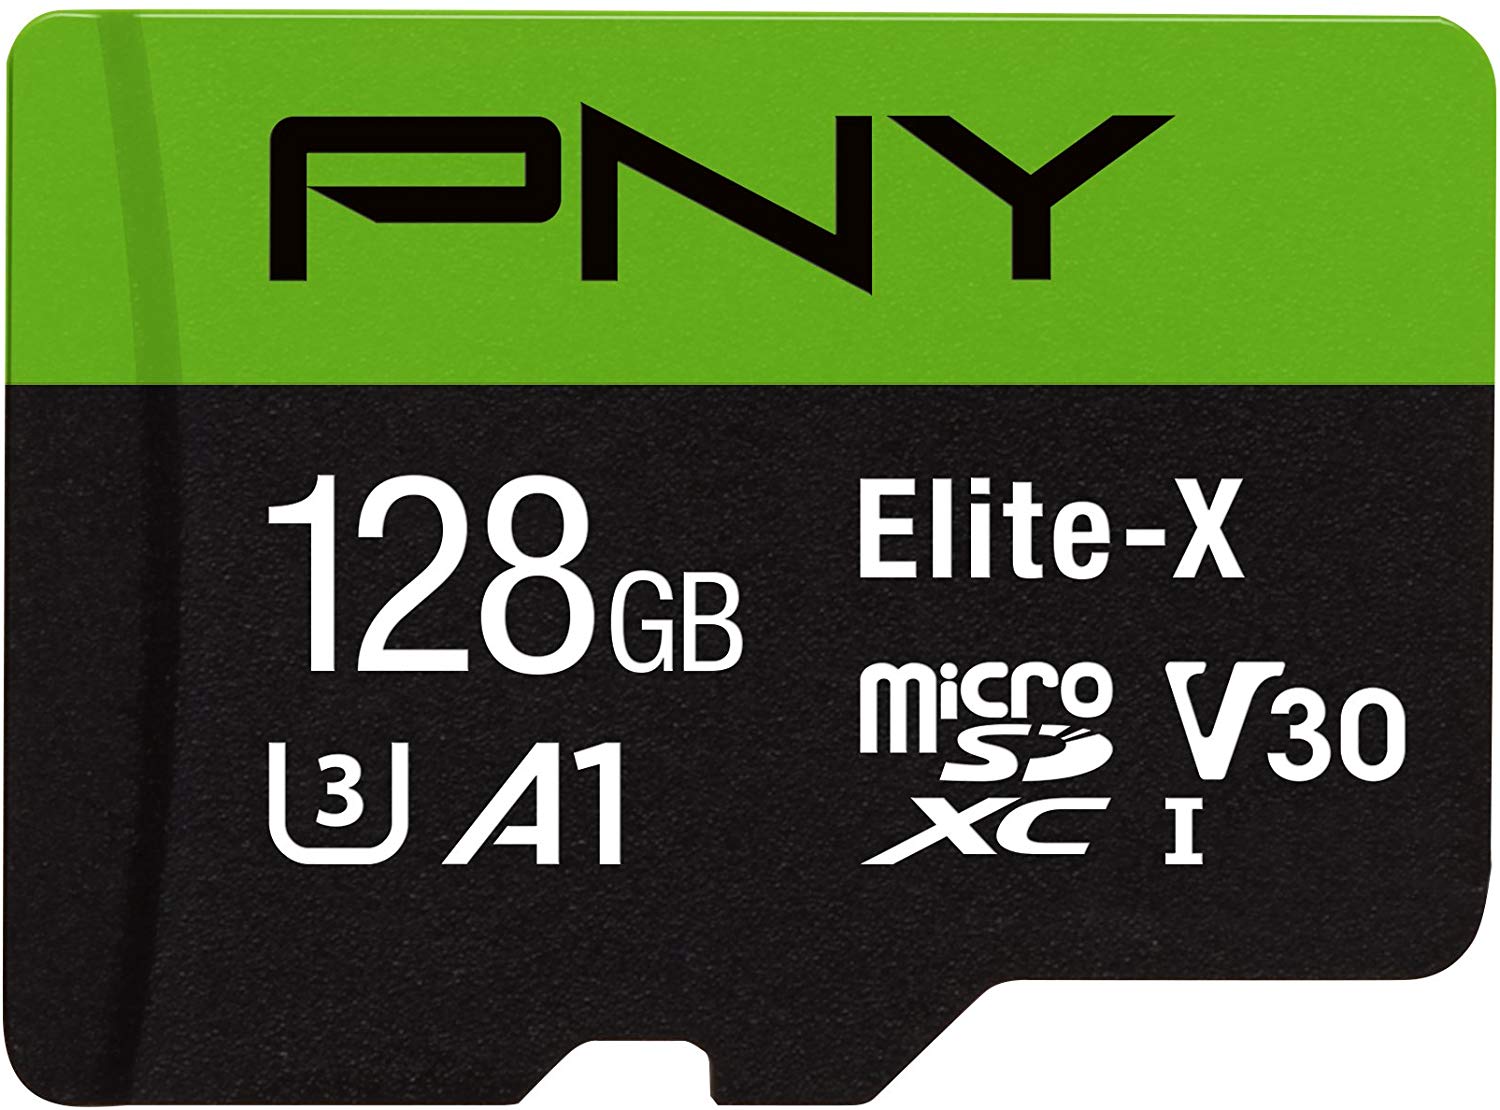 PNY Elite-X 128GB microSD